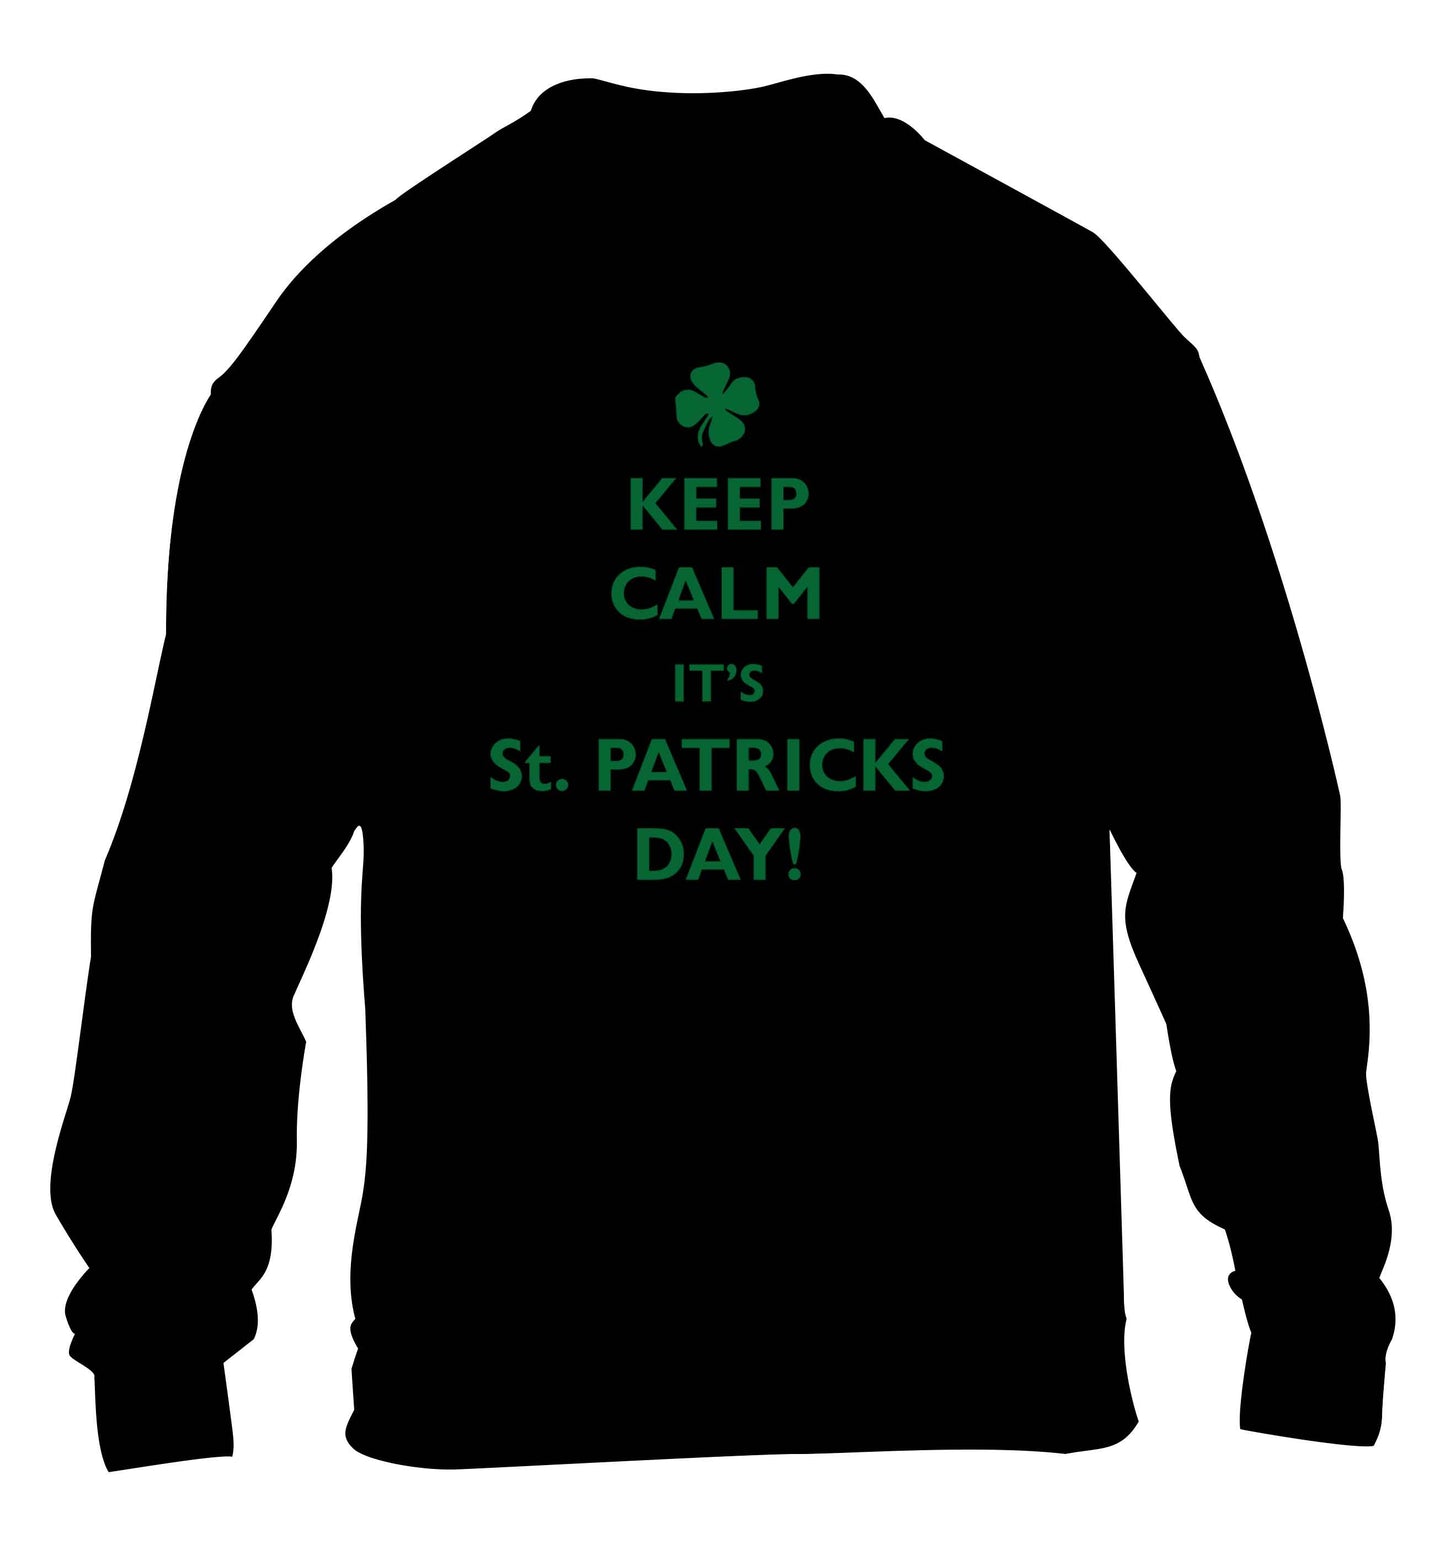 Keep calm it's St.Patricks day children's black sweater 12-13 Years